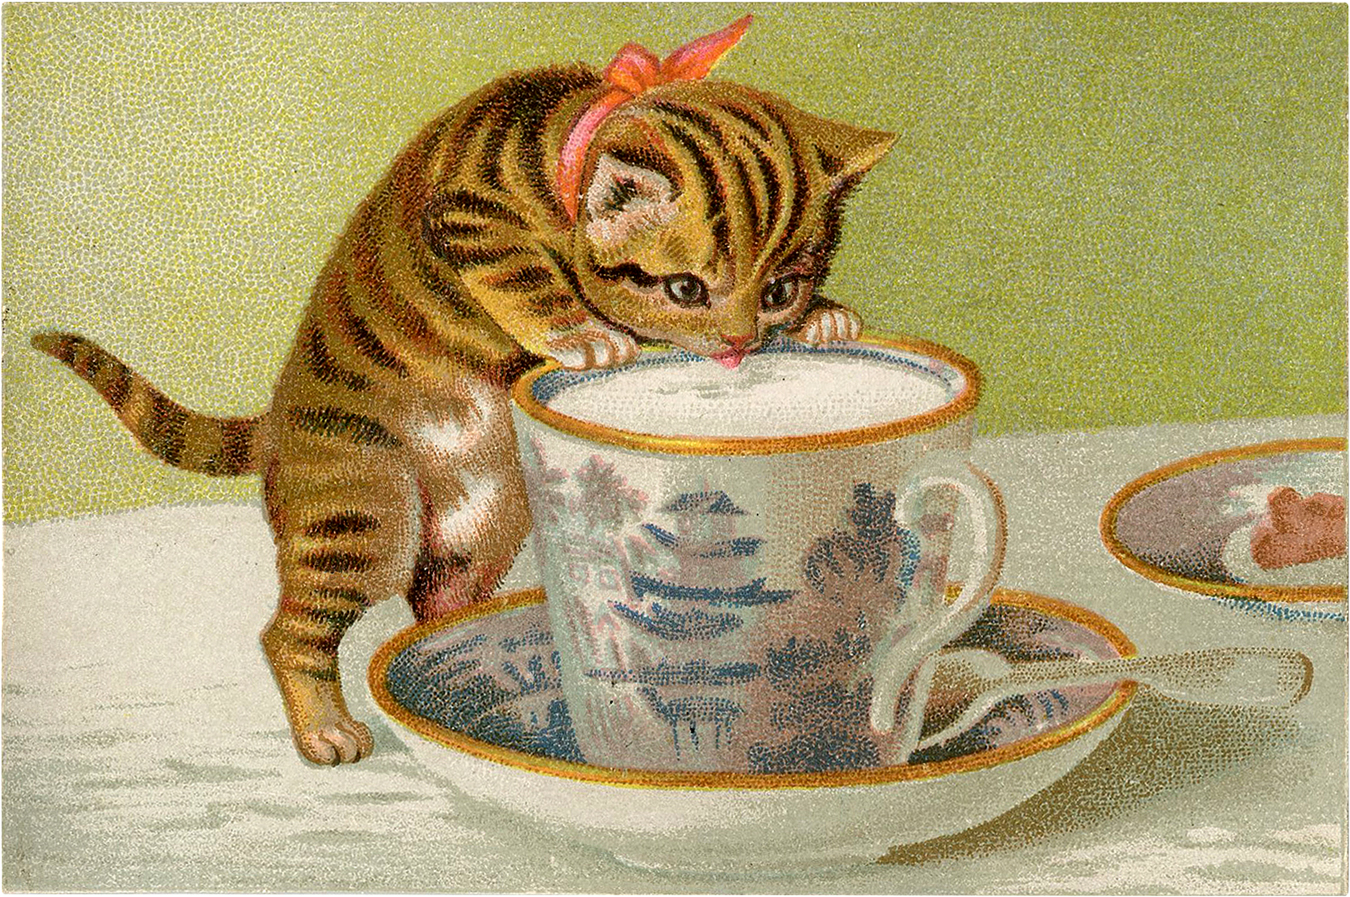 https://thegraphicsfairy.com/wp-content/uploads/2018/09/Vintage-Teacup-Kitten-Image-GraphicsFairy.jpg